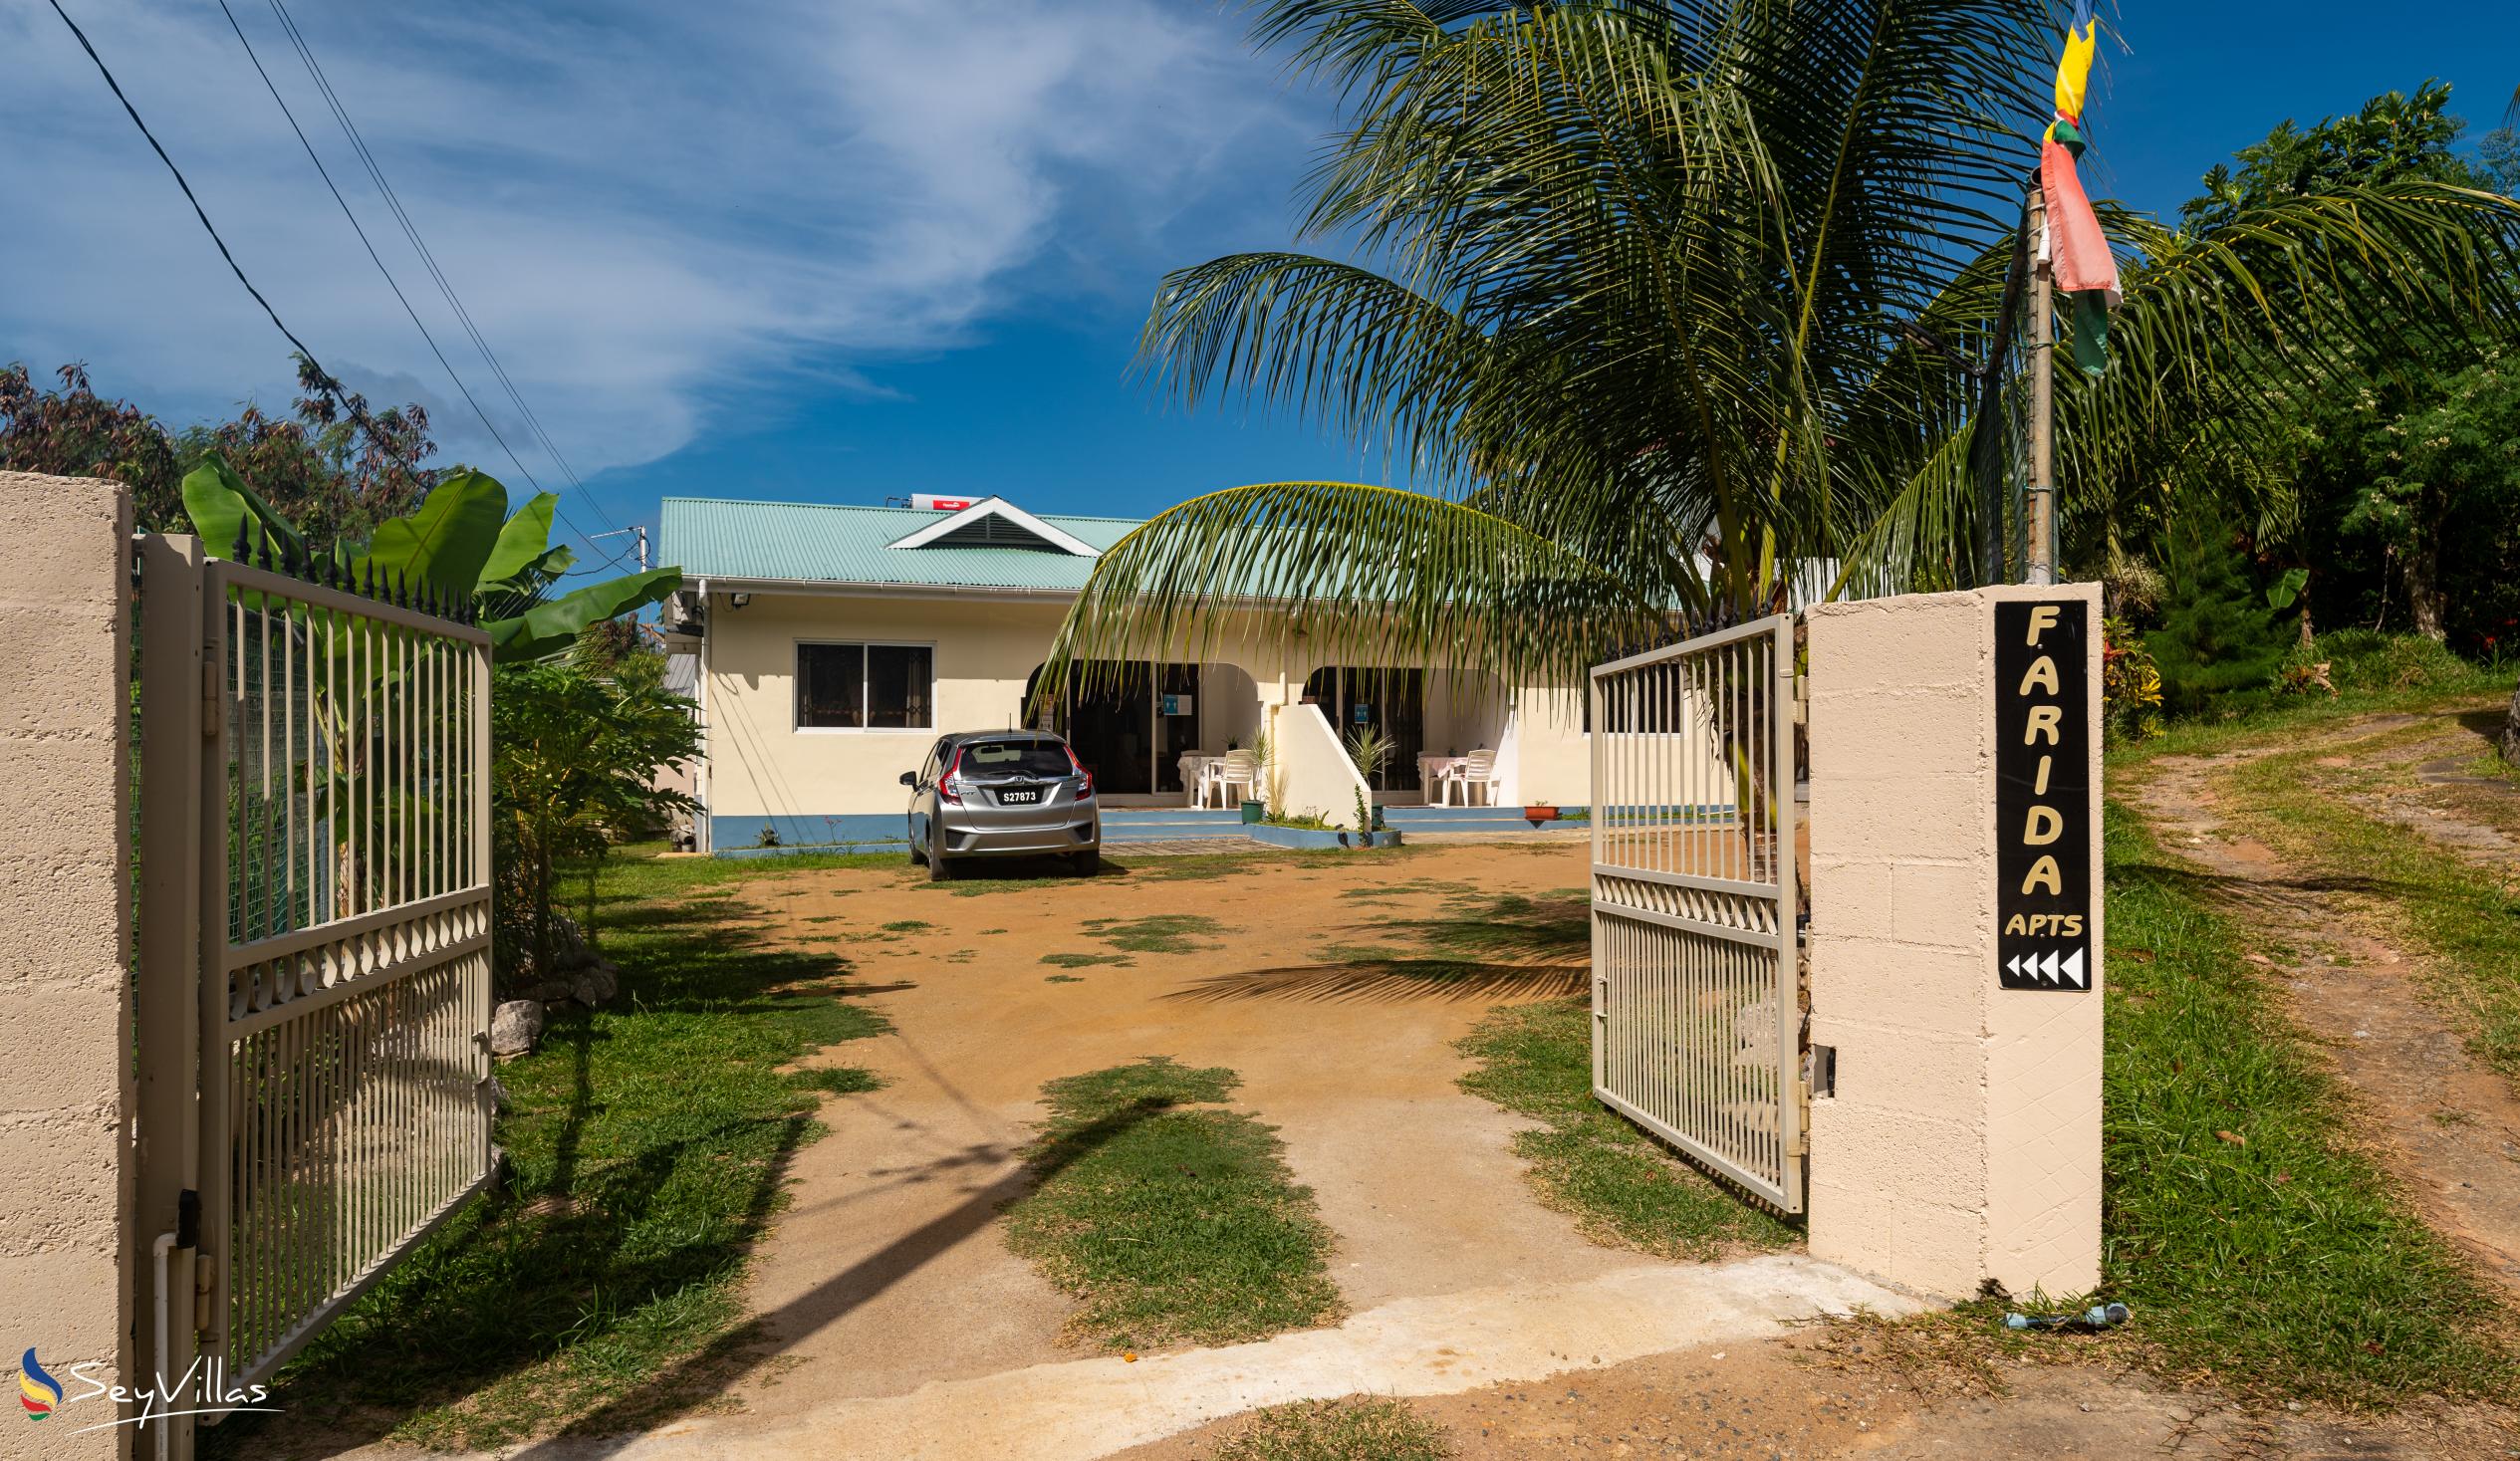 Foto 12: Farida Apartments - Aussenbereich - Mahé (Seychellen)